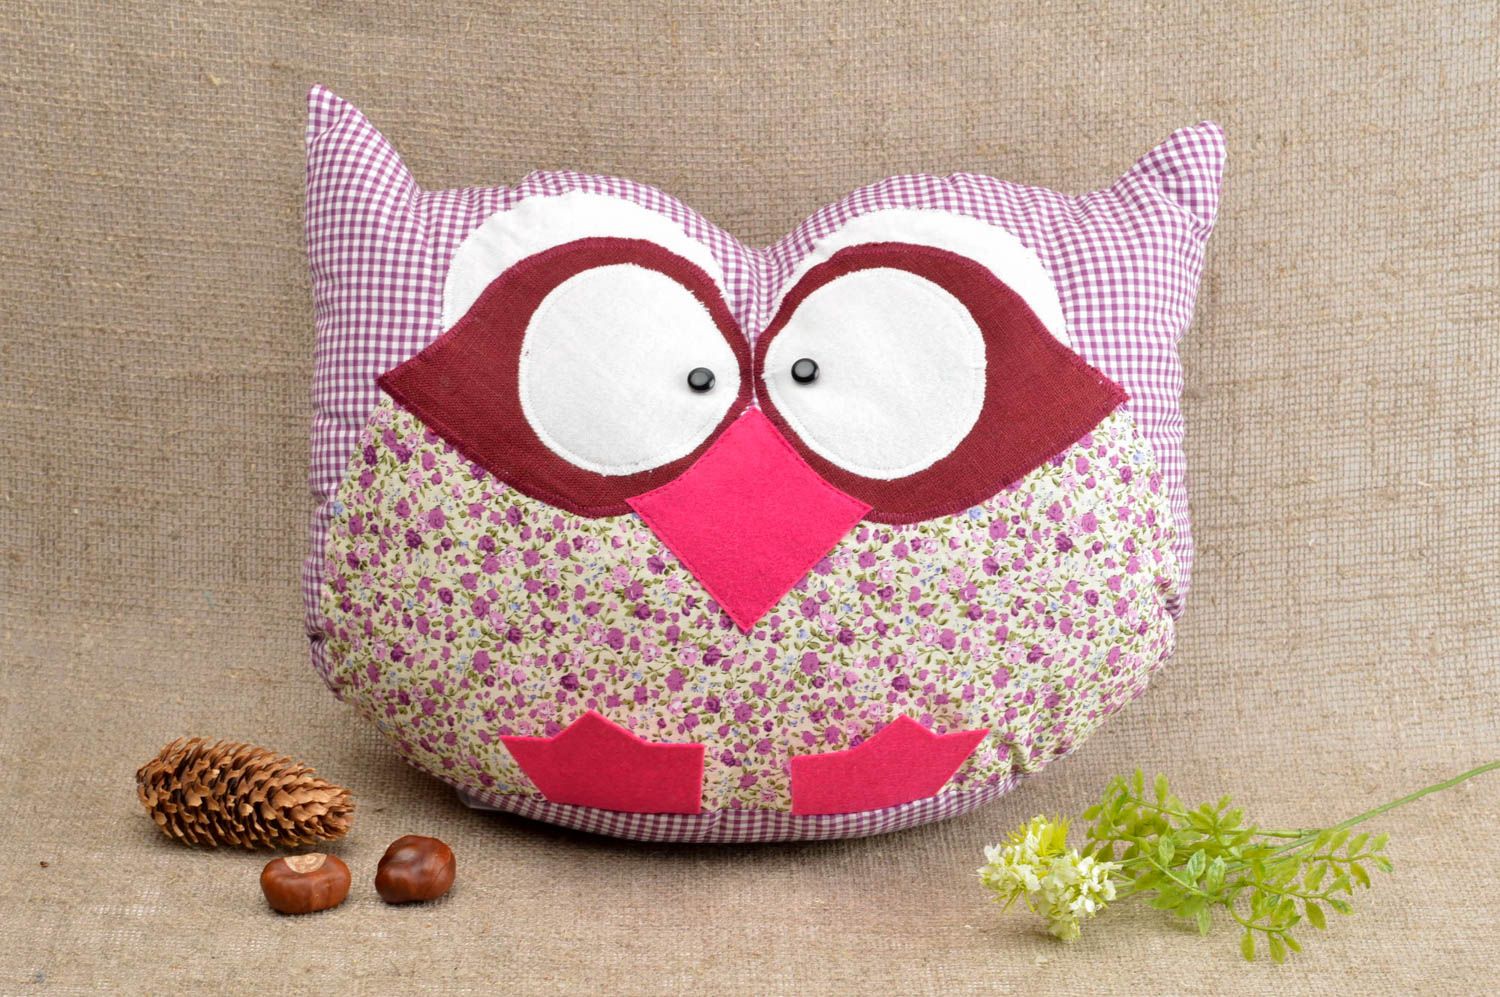 Decorative handmade stylish pillow interesting accessories cute home decor photo 1